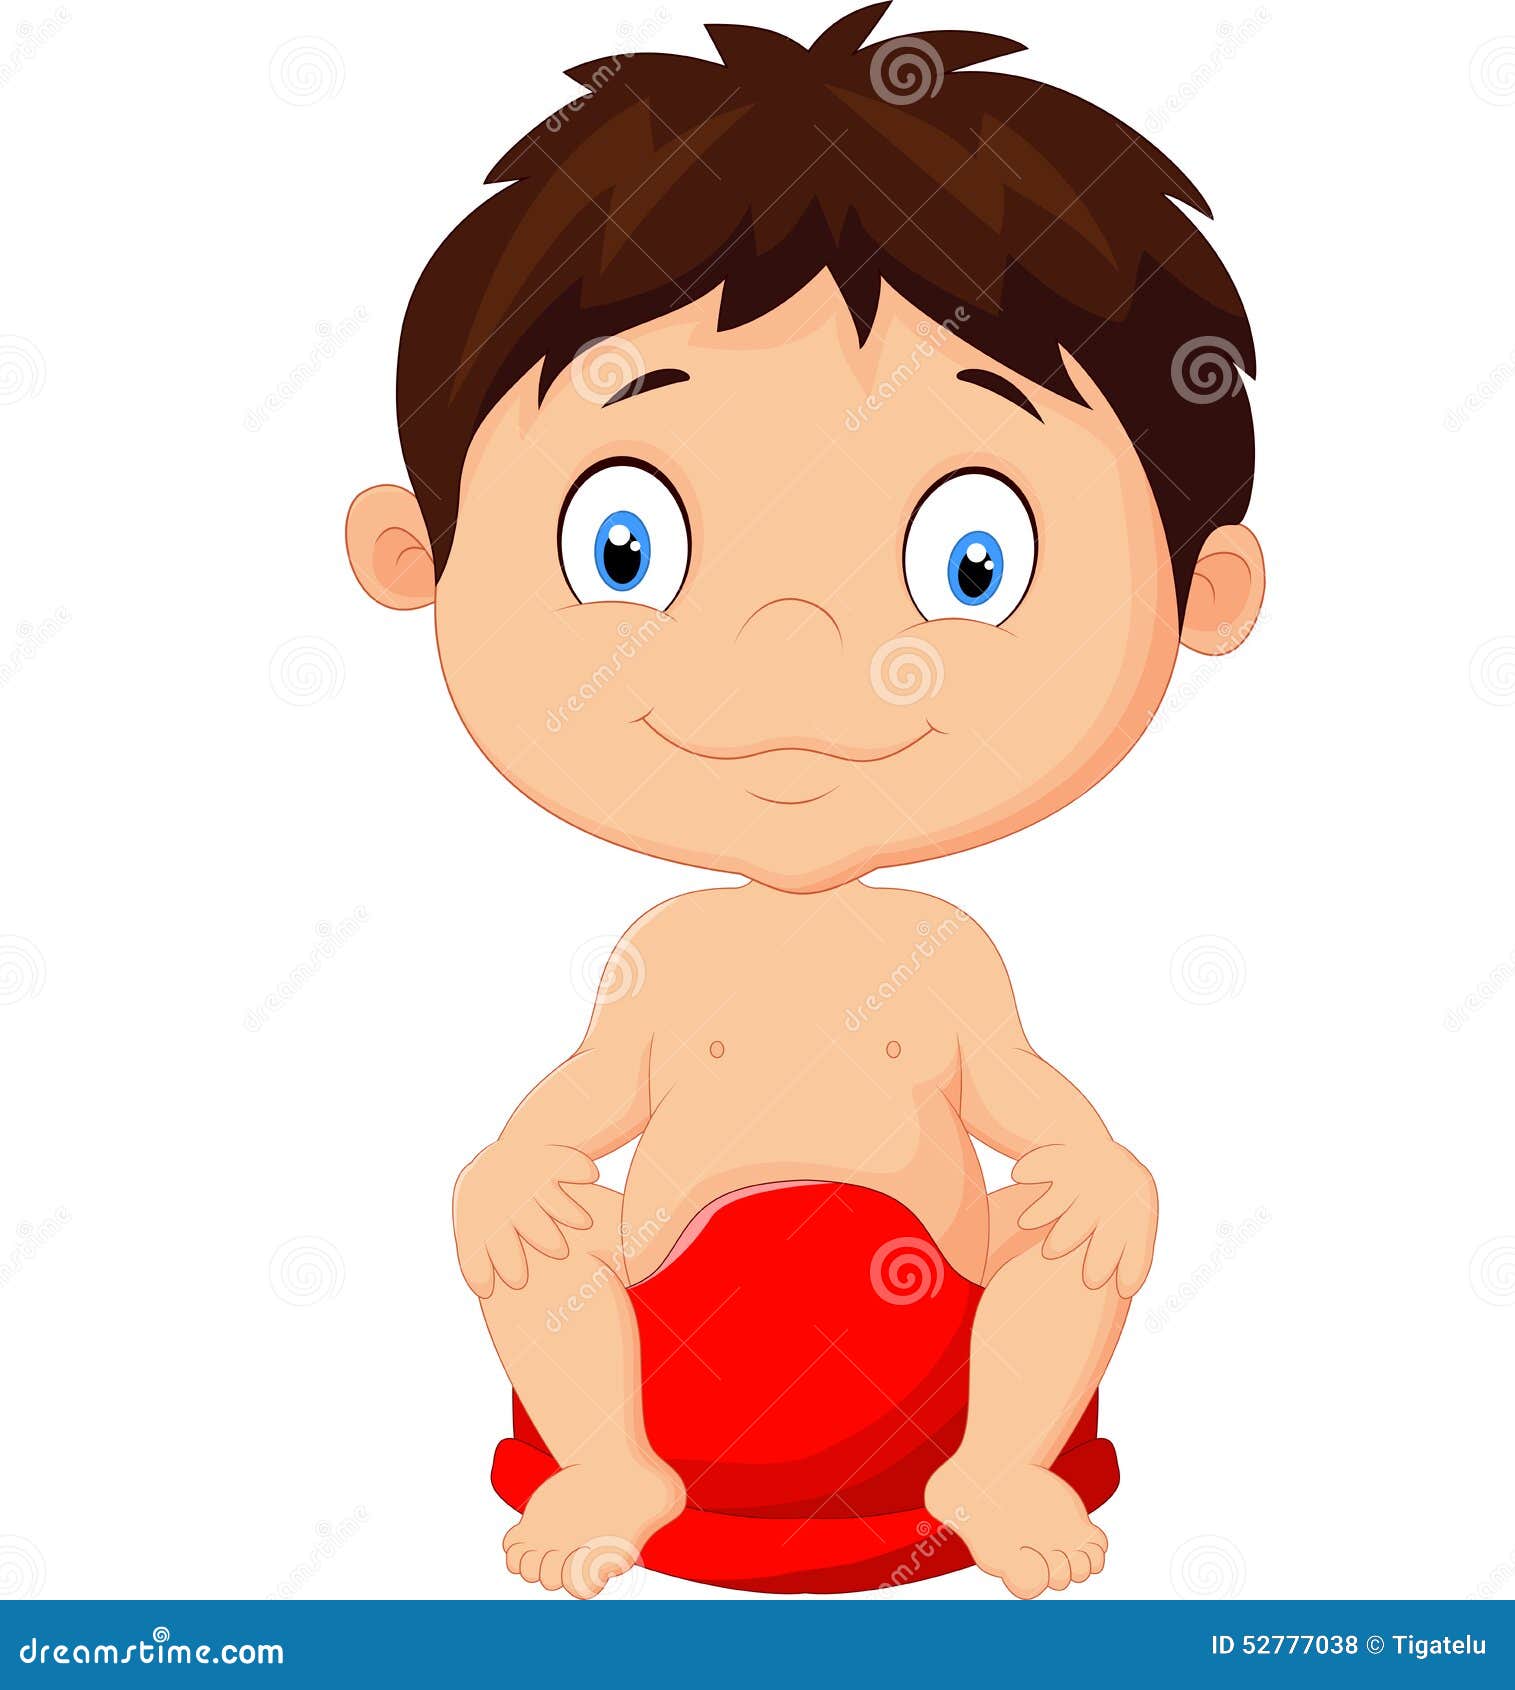 Cartoon Boy Sitting On The Potty Stock Vector - Image: 52777038